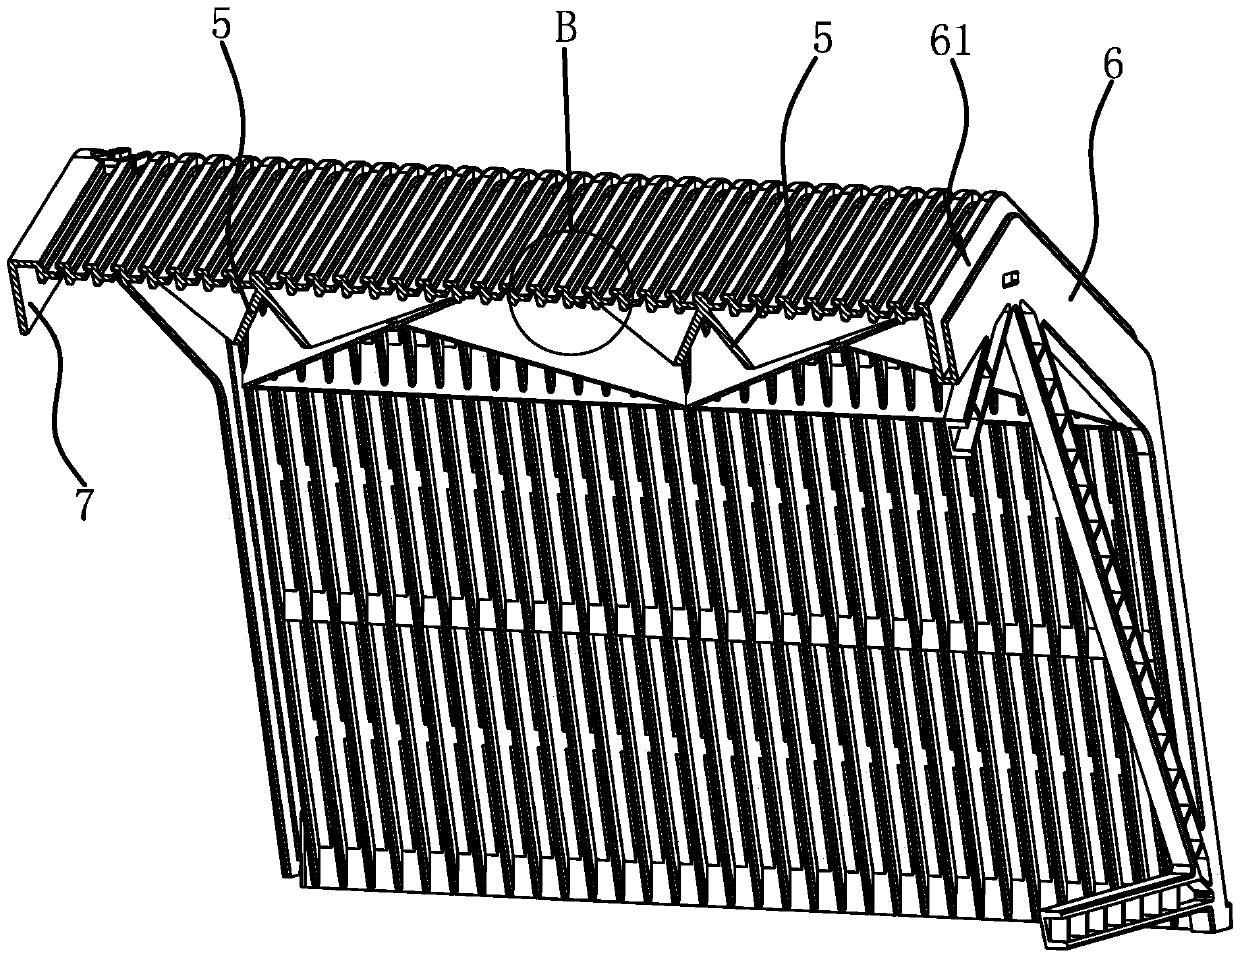 Ventilating cage